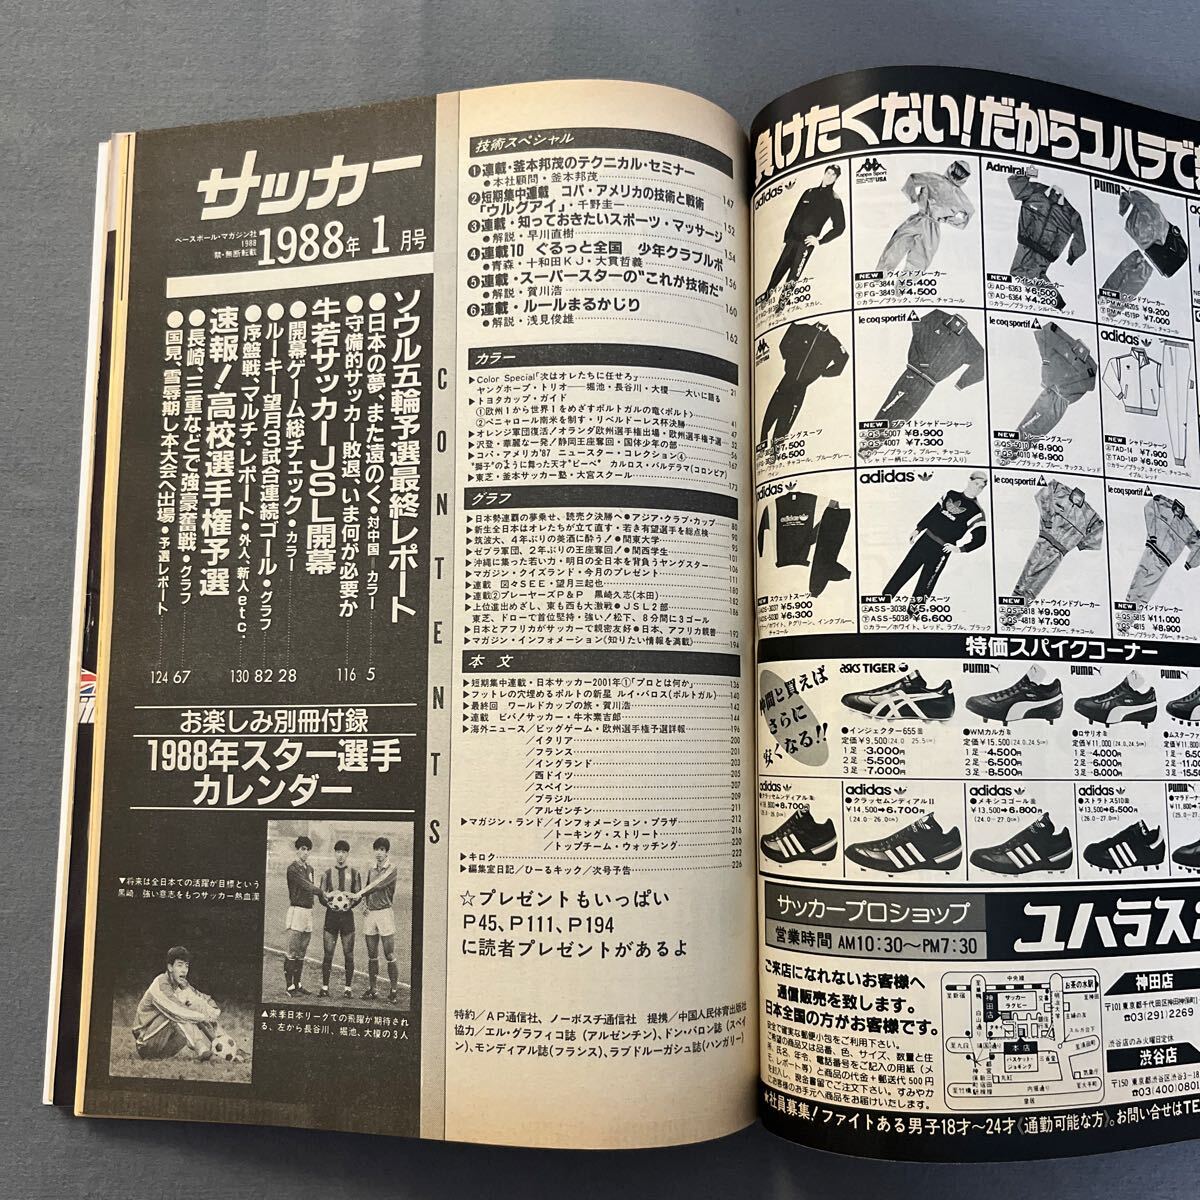  soccer magazine 1 month number * Showa era 63 year 1 month 1 day issue * soul . wheel * Japan representative * large .*..* Hasegawa 